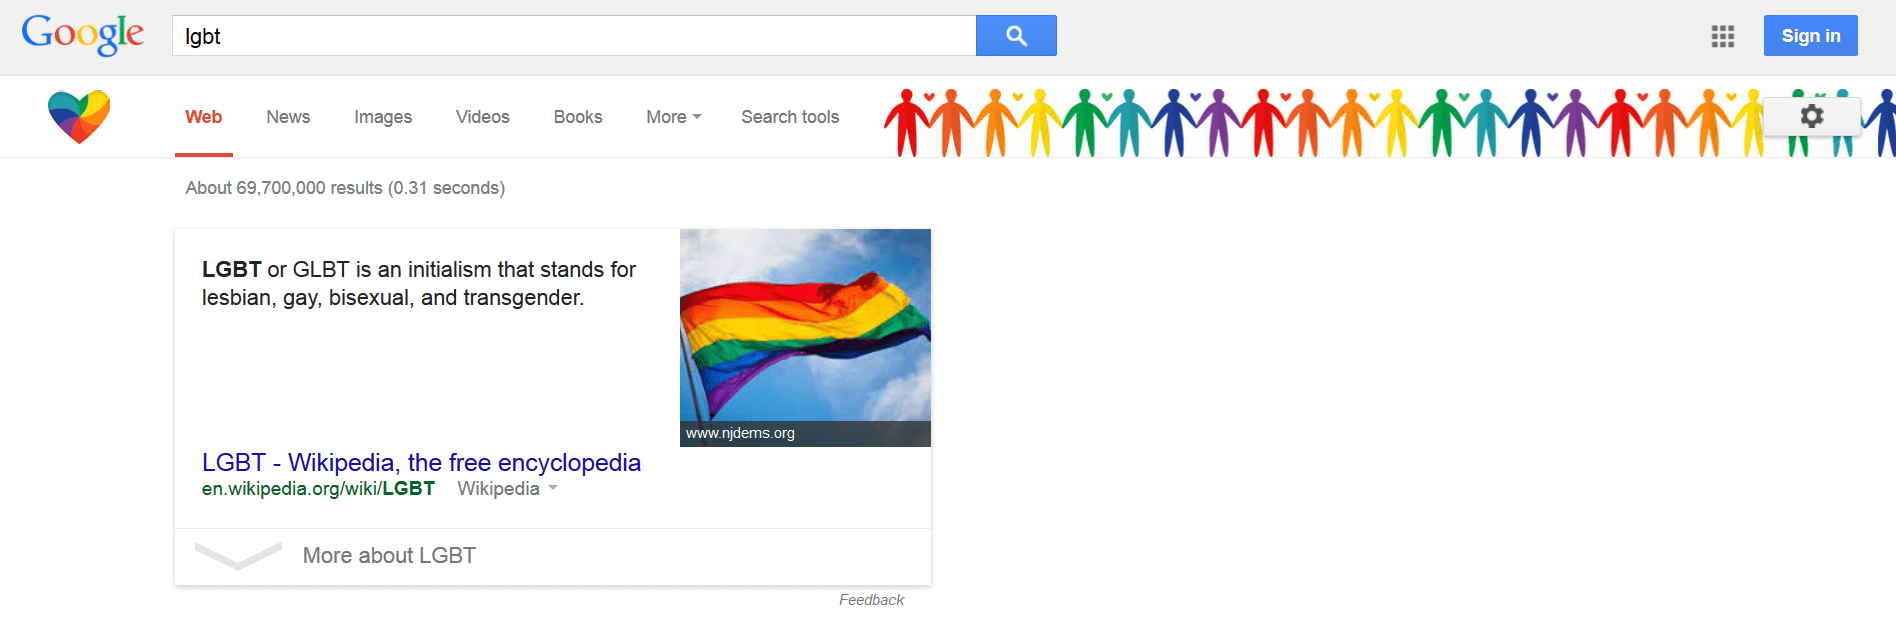 google-lgbt-search-2015-gay-pride-month